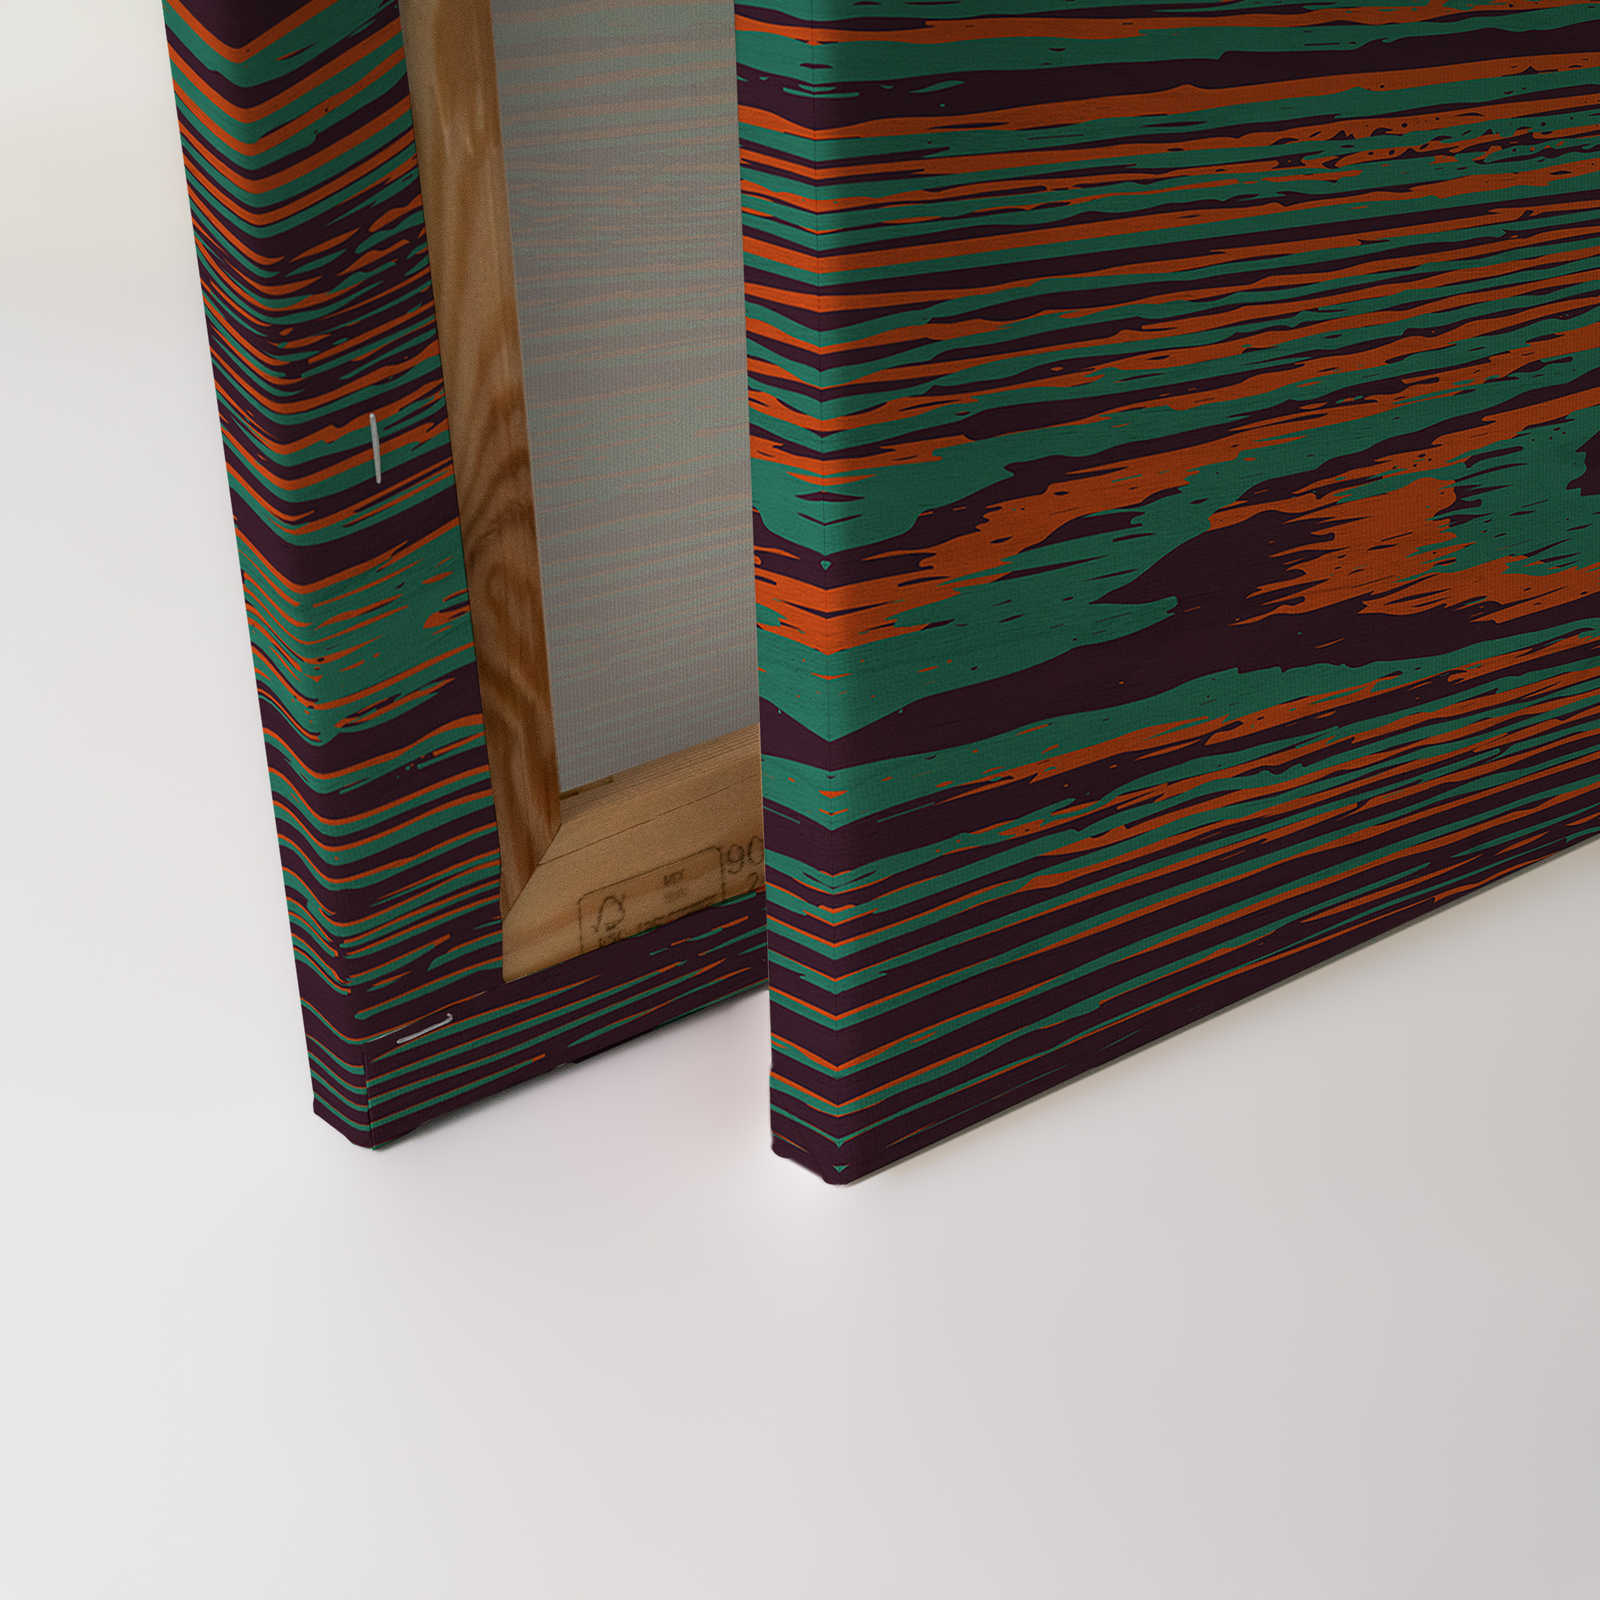             Kontiki 1 - Leinwandbild Holzmaserung Neon-Farben, Grün & Schwarz – 1,20 m x 0,80 m
        